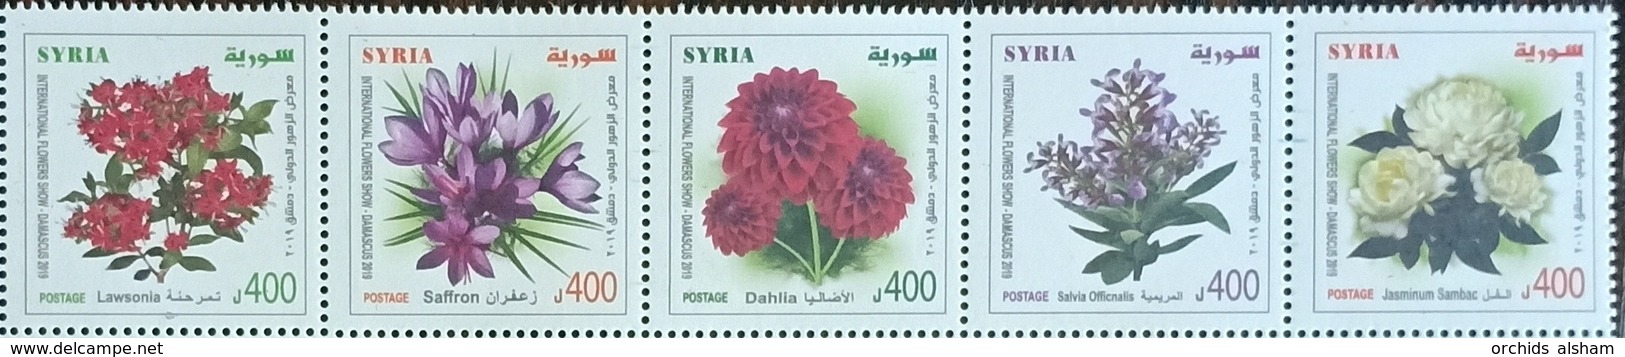 Syria 2019 NEW MNH Set - Flowers - Syria